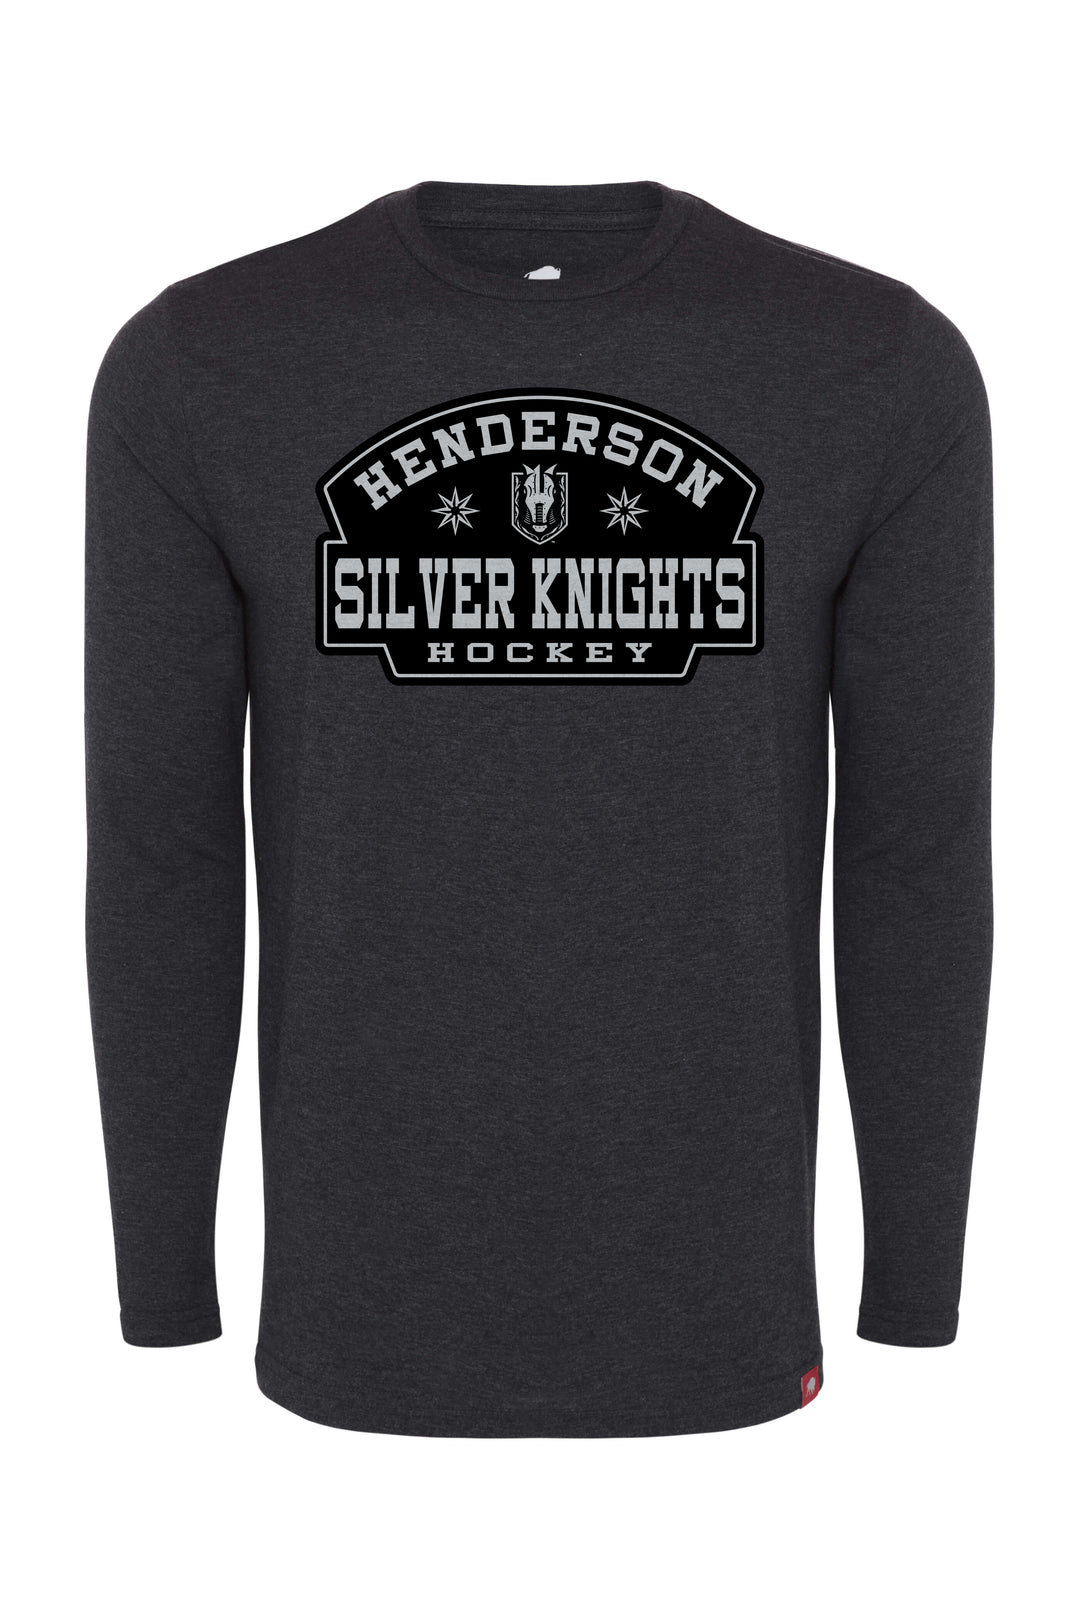 Henderson Silver Knights CCM Premier White Jersey S